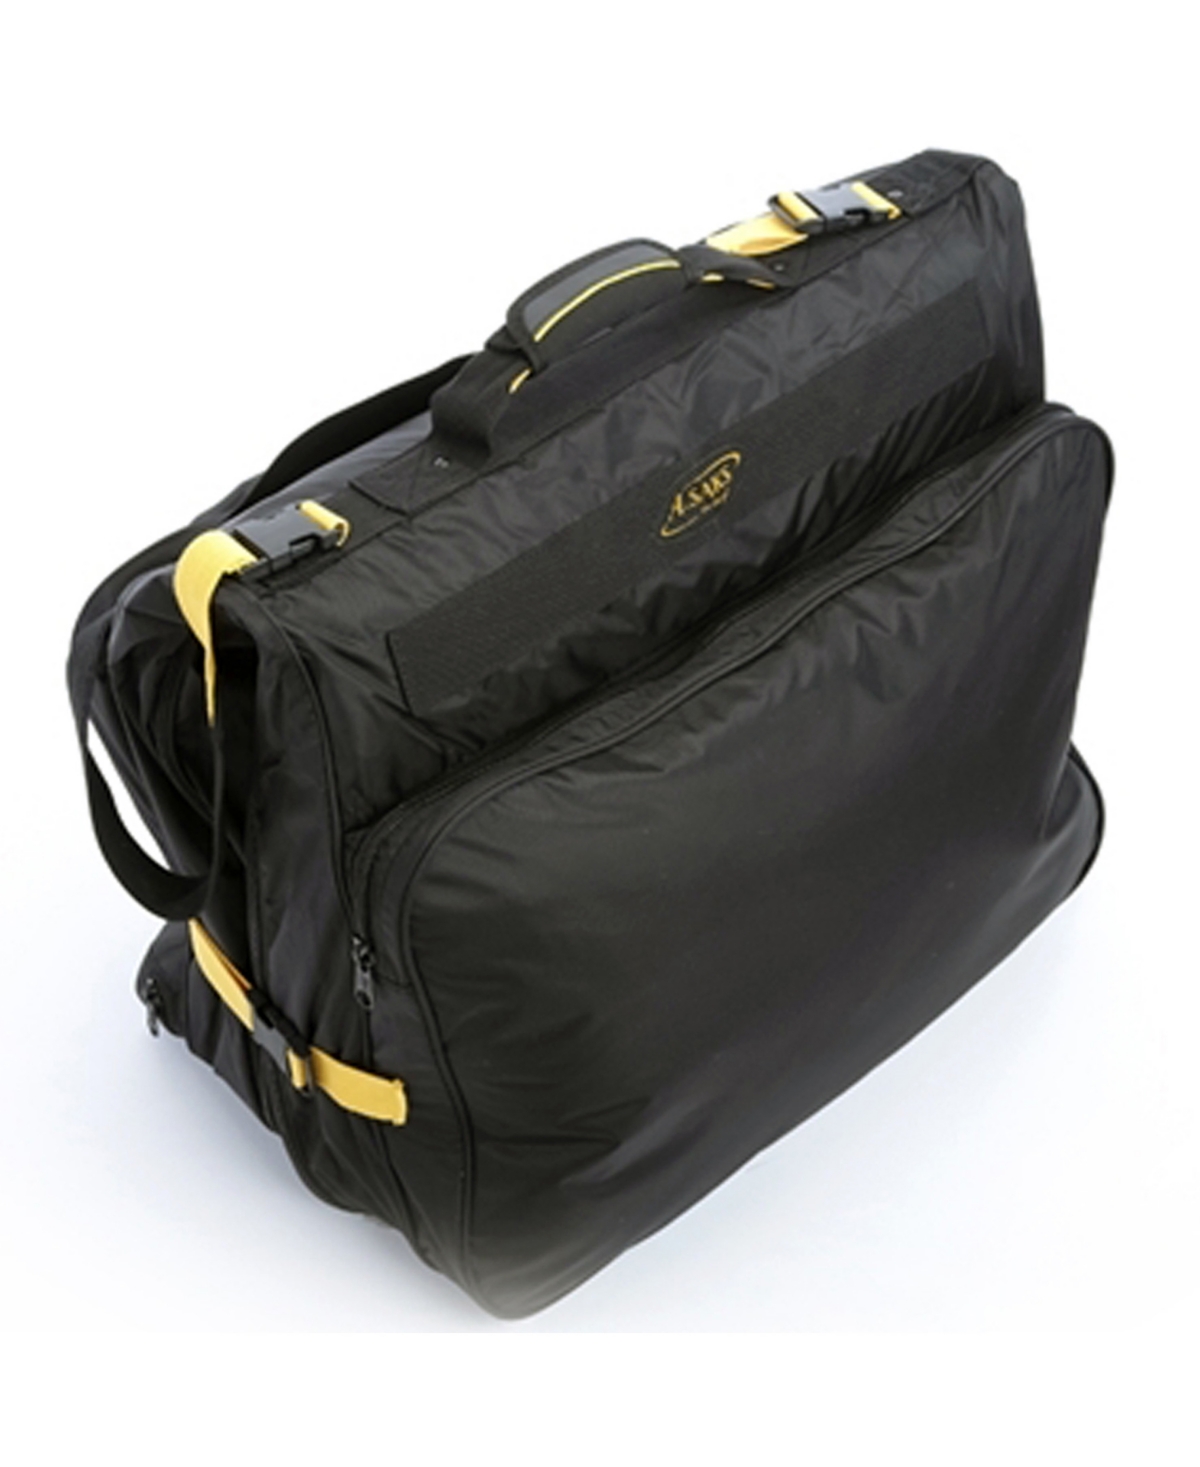 Deluxe Expandable Garment Bag - Black